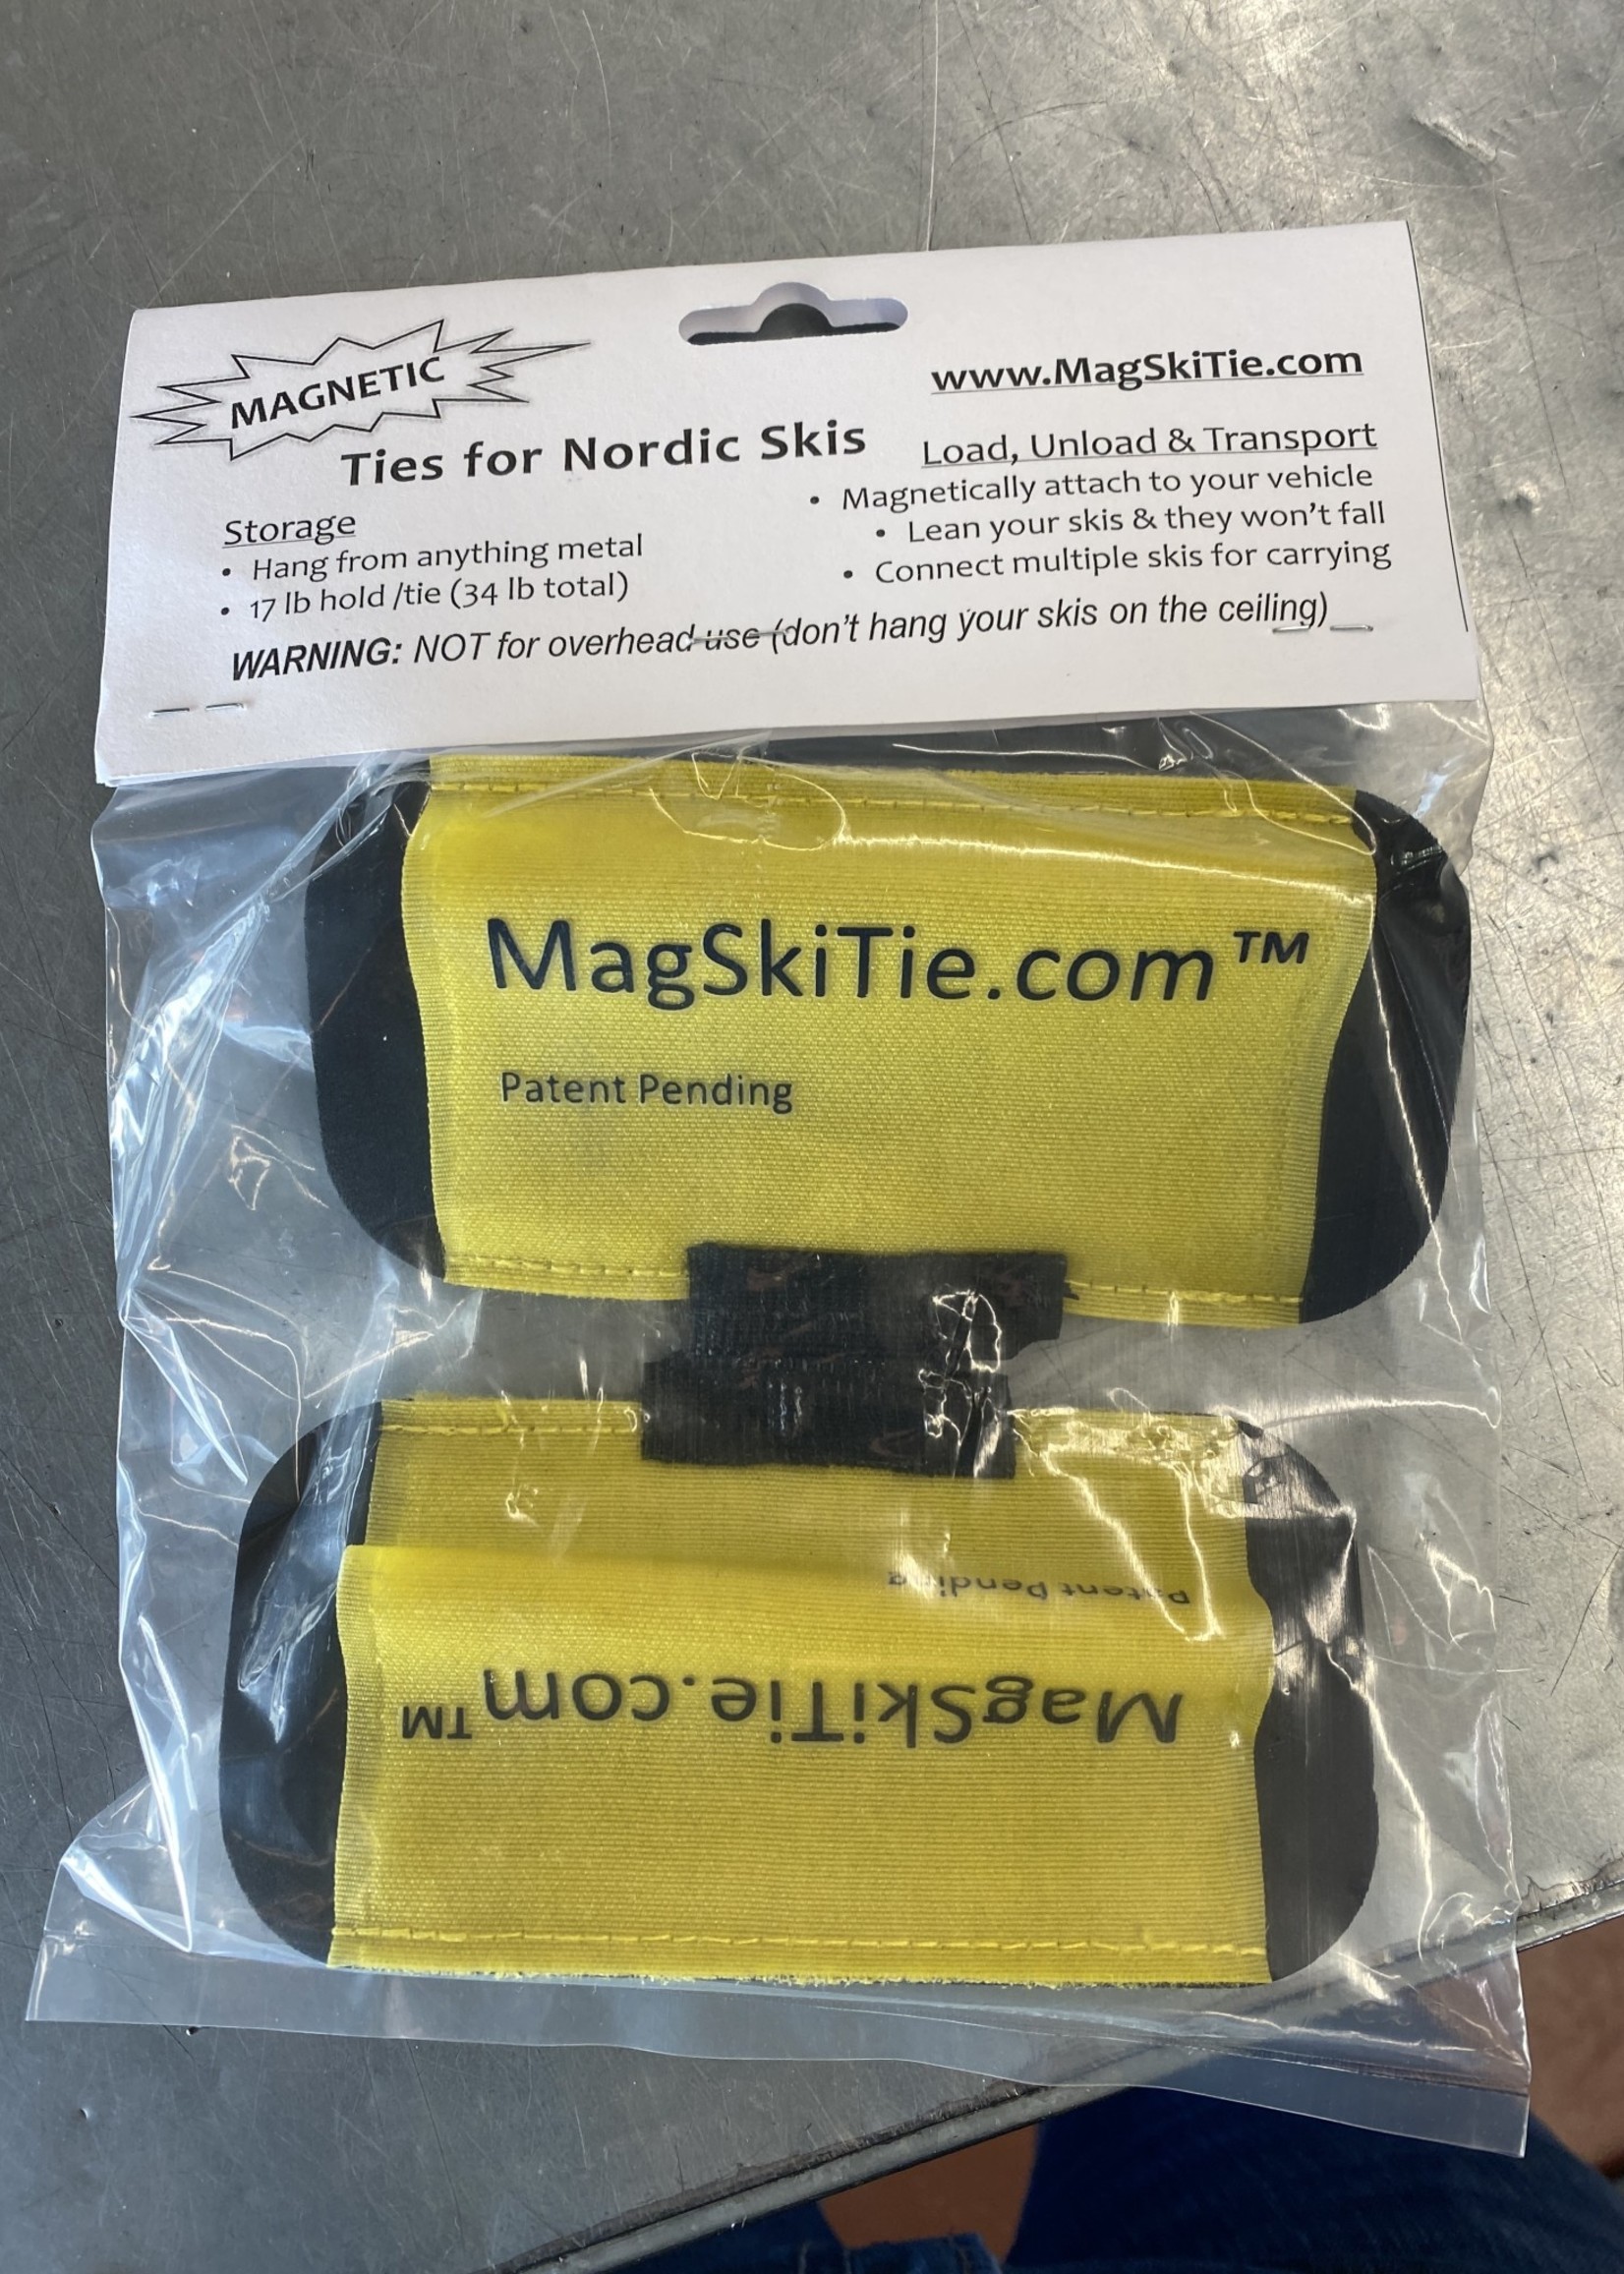 Magskitie Mag ski tie larger touring ski size : up to 2.5 "